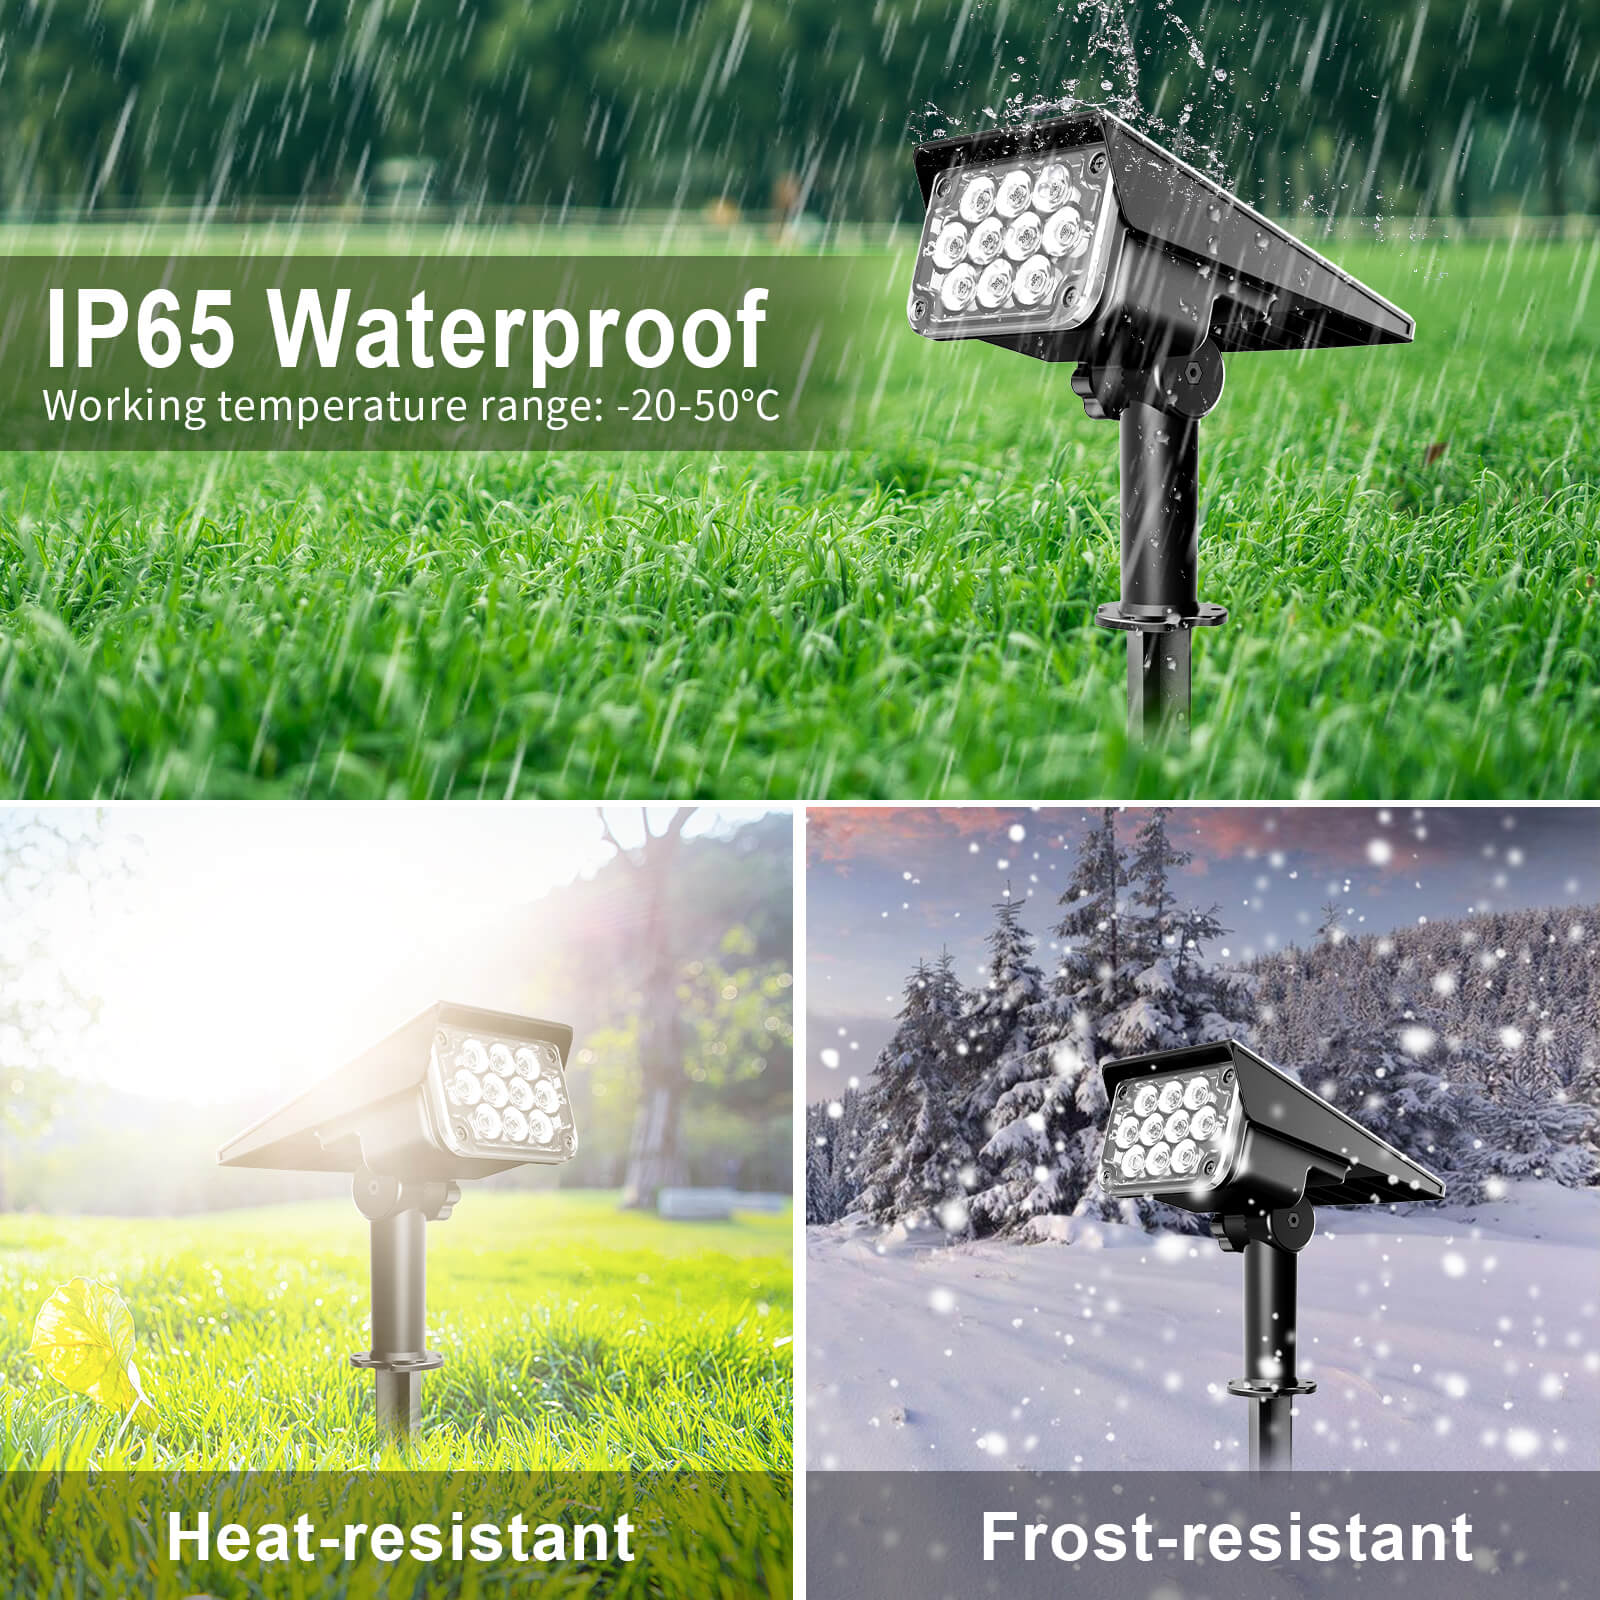 IP65 Waterproof. Working temperature range: -20-50℃